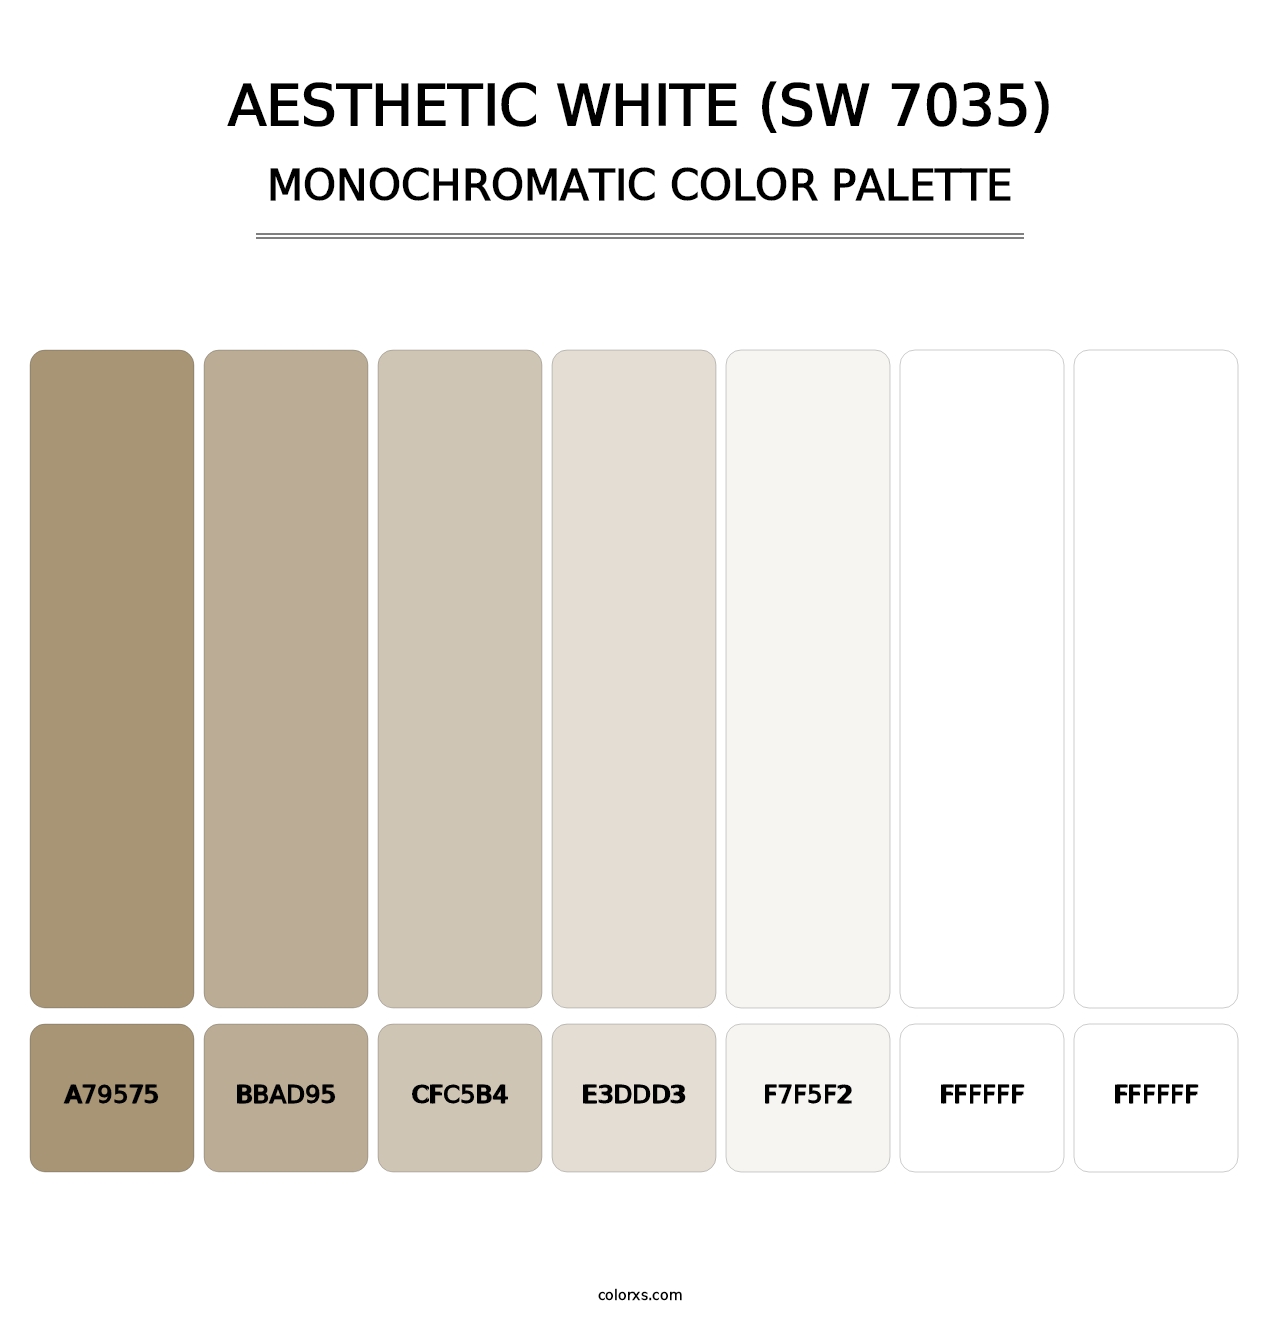 Aesthetic White (SW 7035) - Monochromatic Color Palette